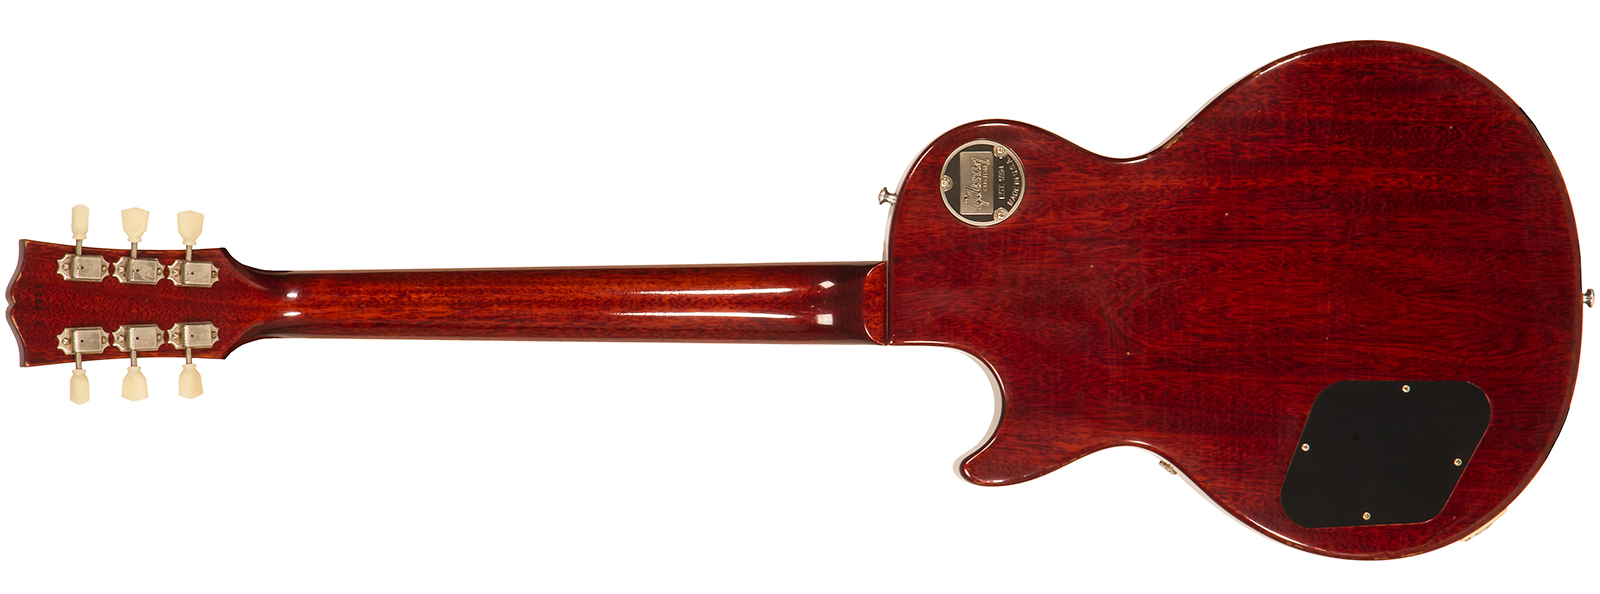 Gibson Custom Shop M2m Les Paul Standard 1958 2h Ht Rw #89904 - Kentucky Bourbon Fade - Enkel gesneden elektrische gitaar - Variation 1